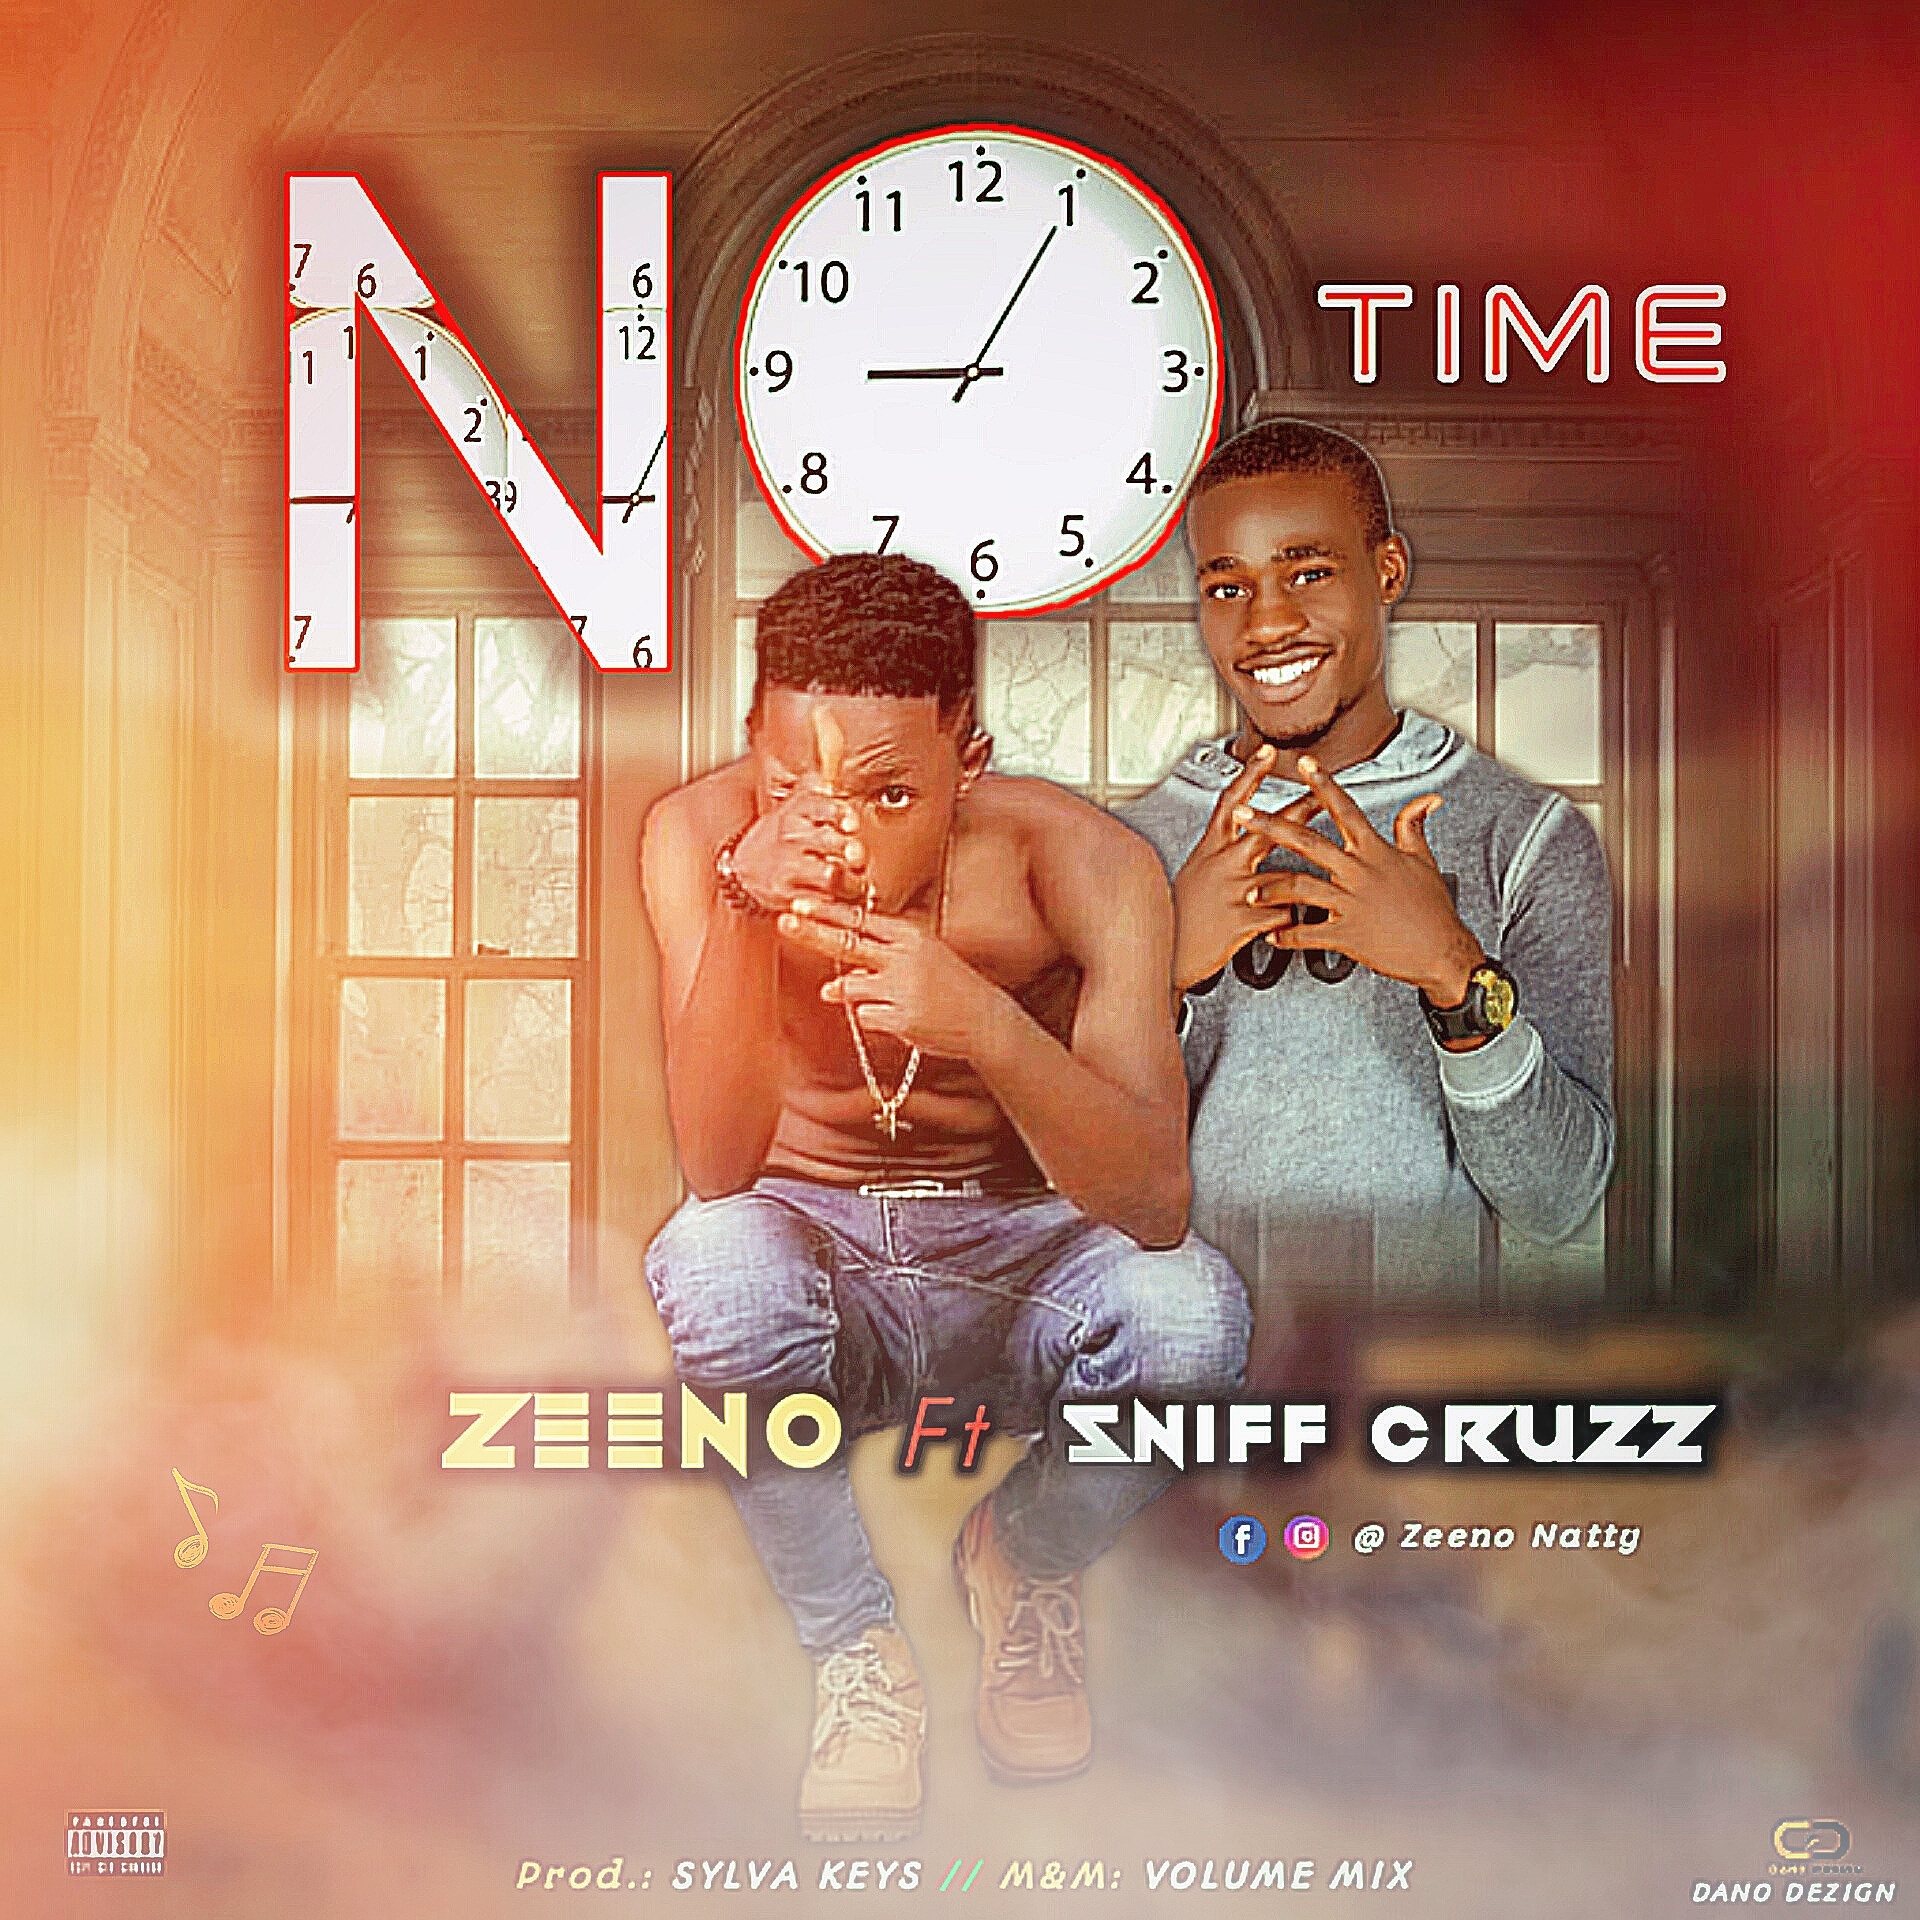 DOWNLOAD MUSIC: Zeeno Natty ft Sniff Cruzz – No Time